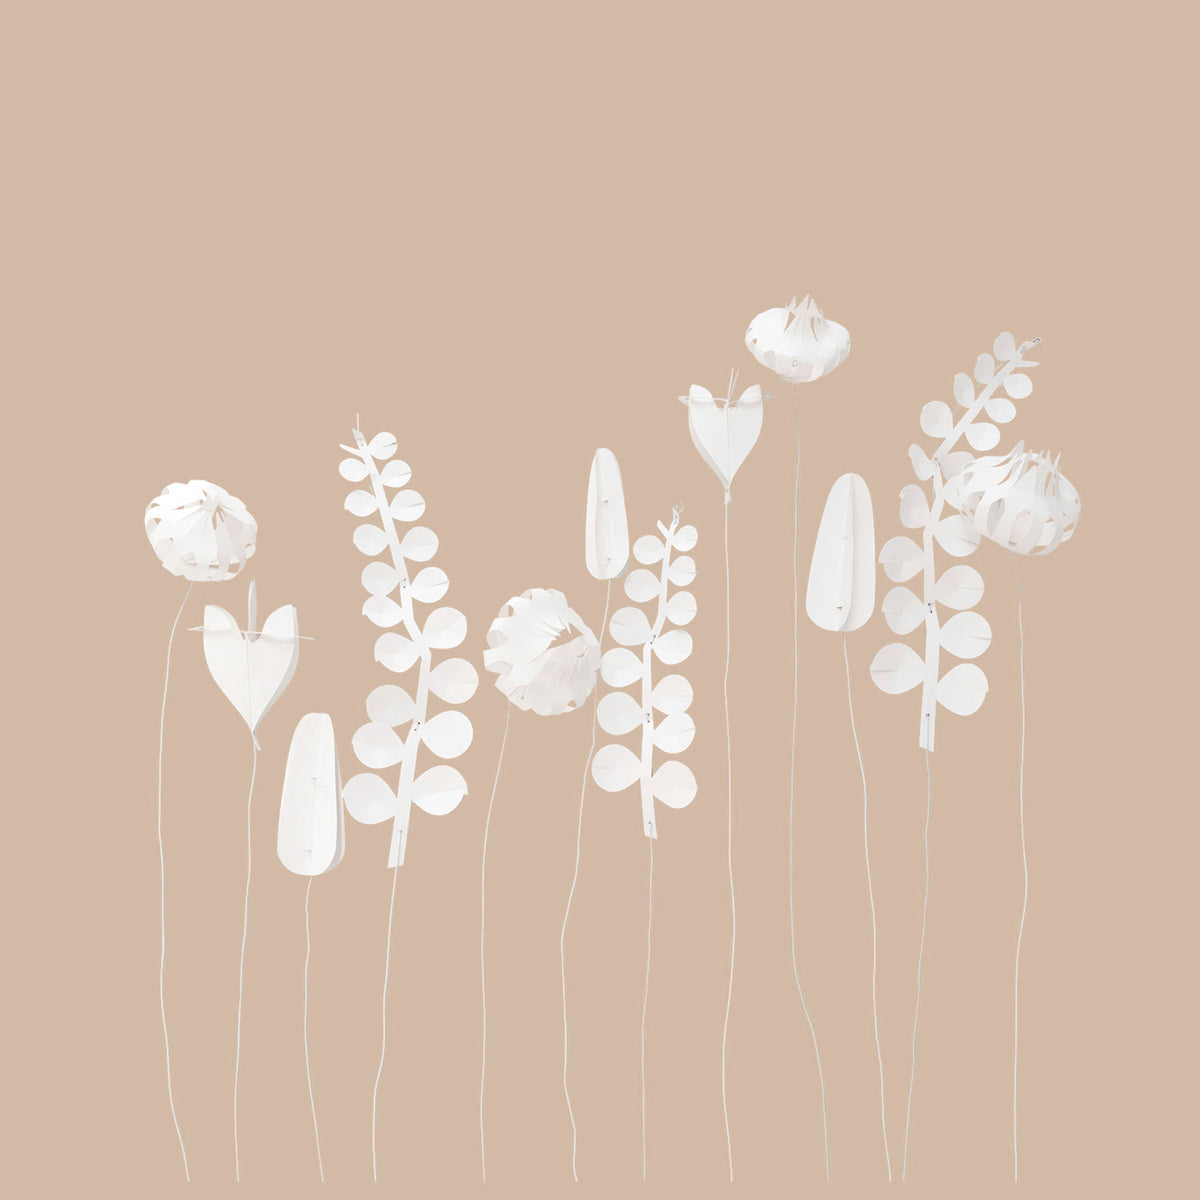 Jurianne Matter - Ornament - Flowers - Field - Large White